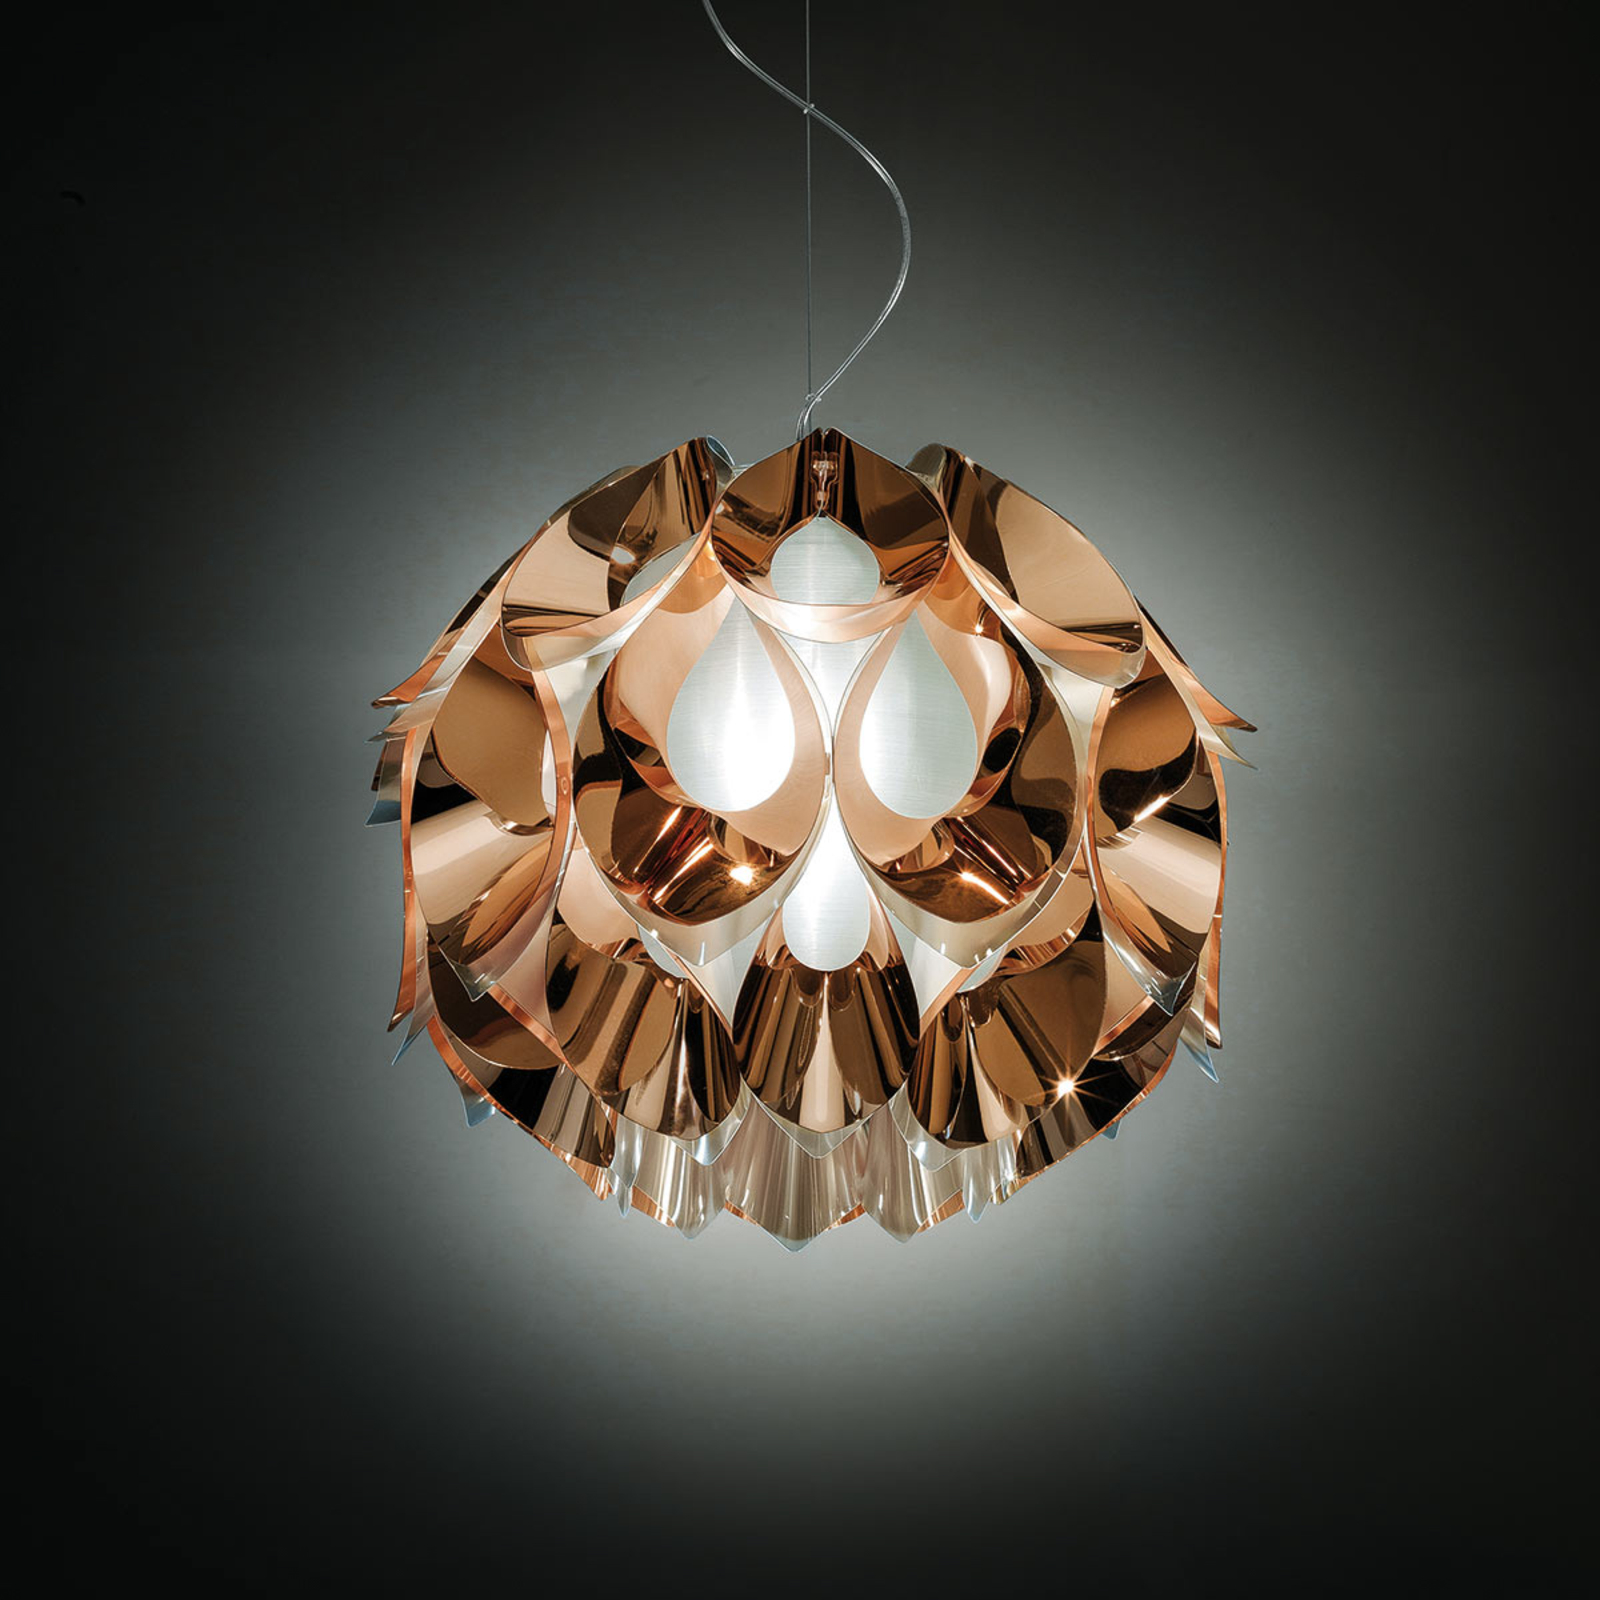 Slamp Flora - lámpara colgante diseño cobre, 50 cm